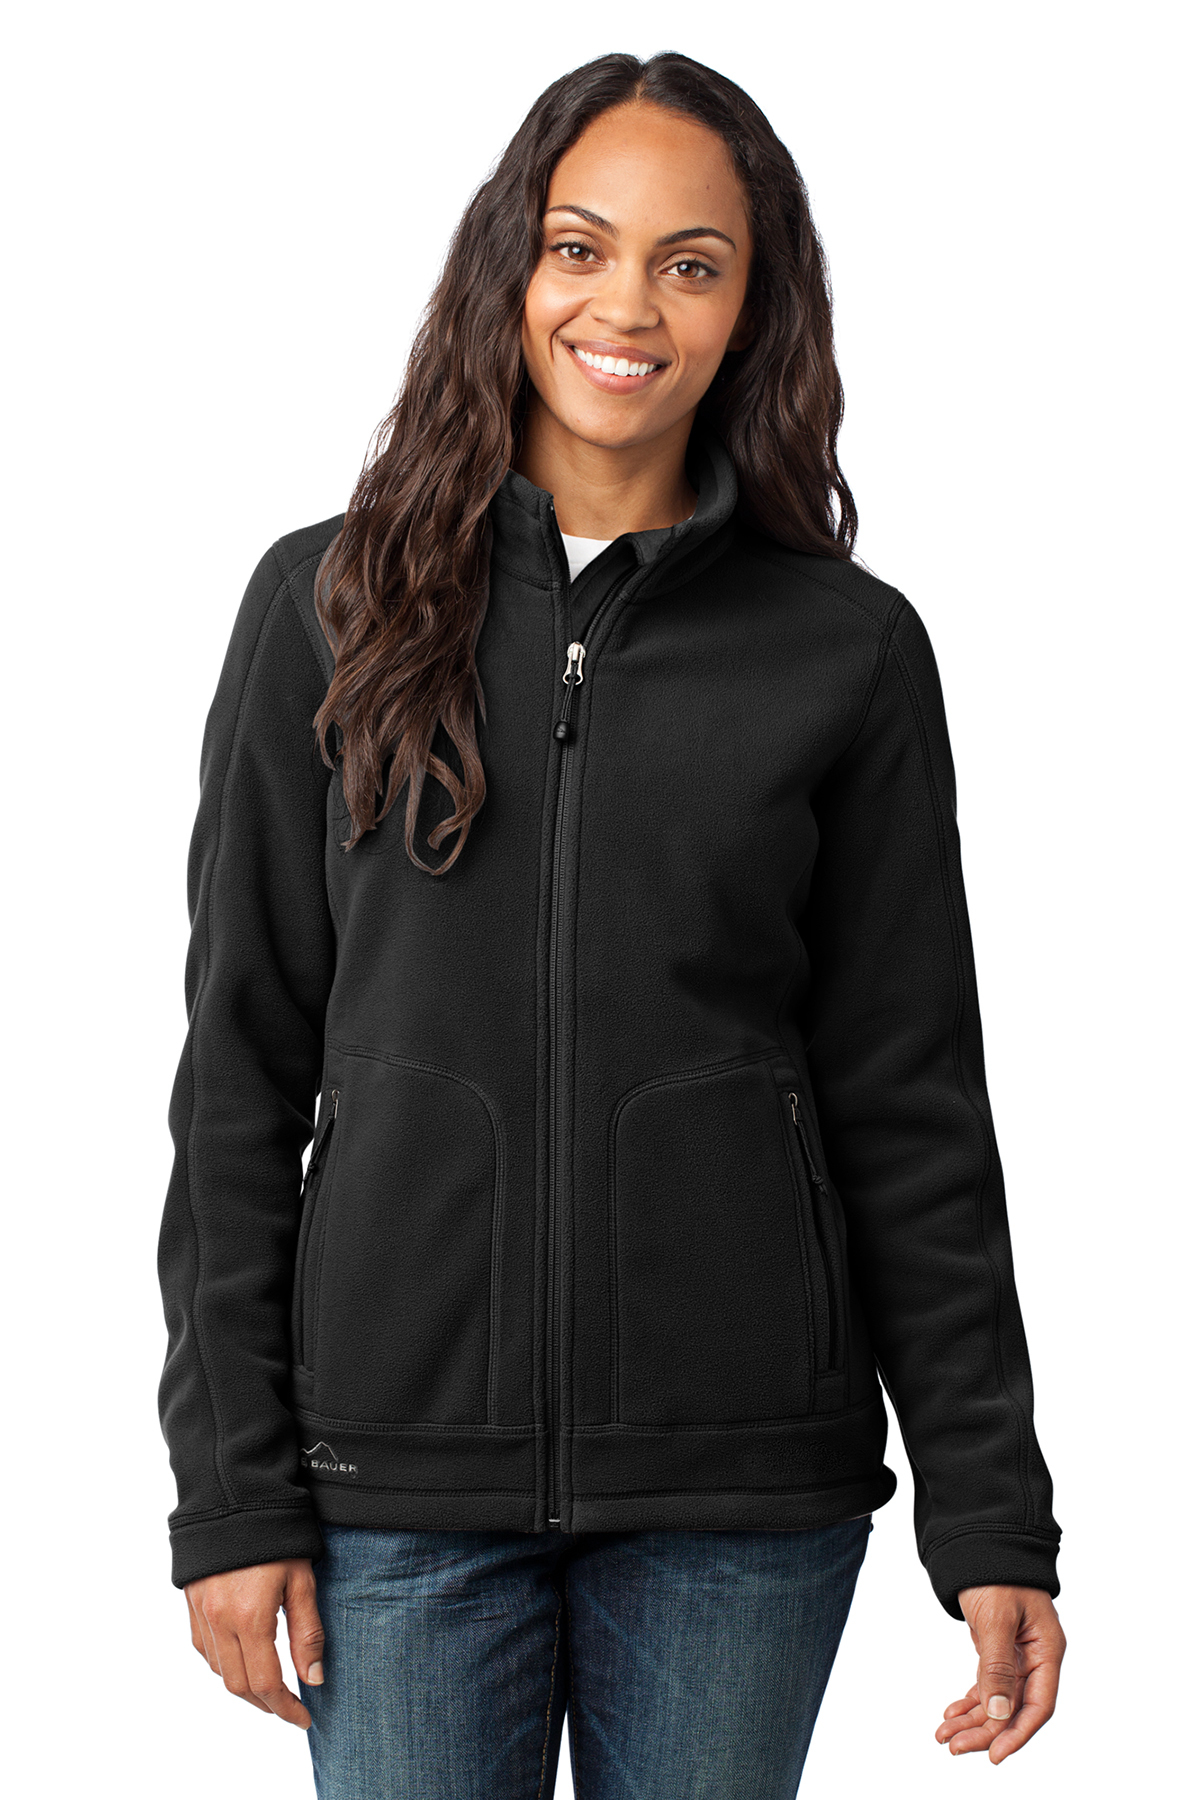 Eddie Bauer - Ladies Wind-Resistant Full-Zip Fleece Jacket | Product ...